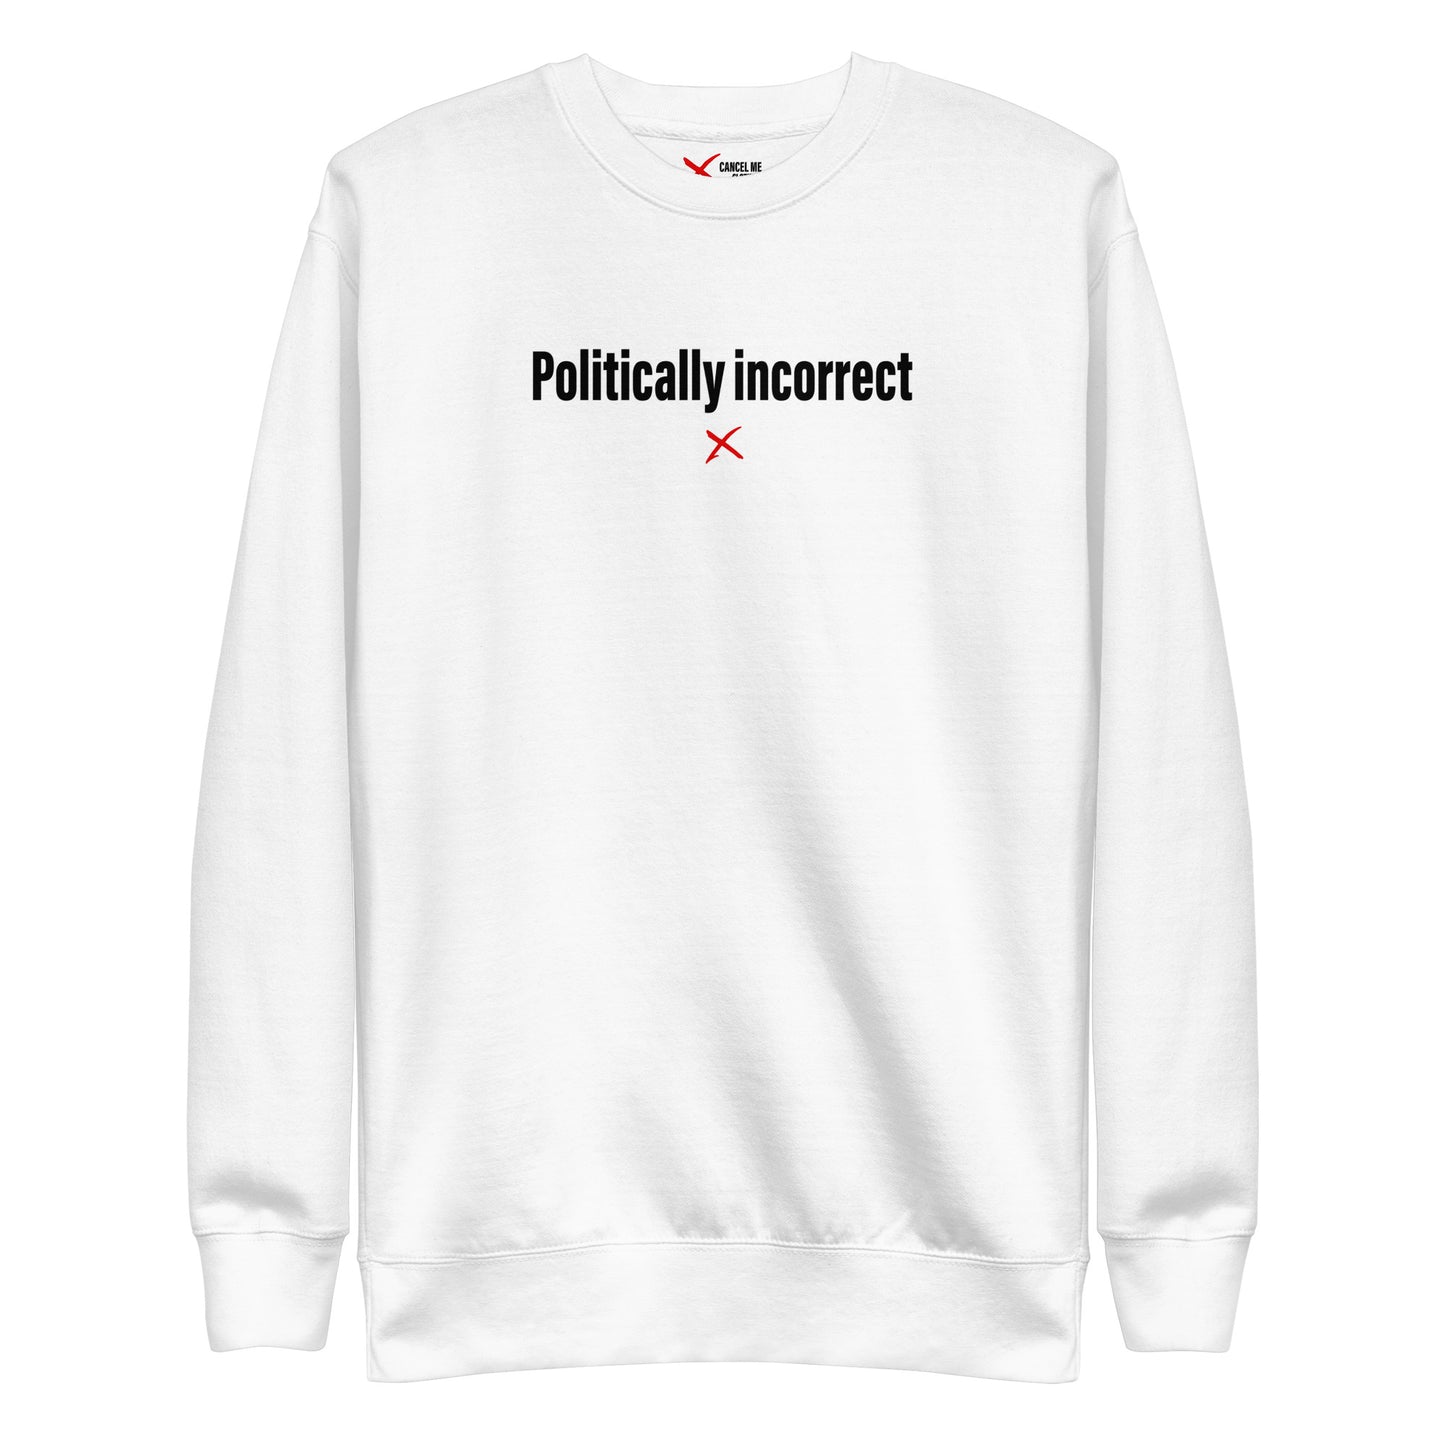 Politically incorrect - Sweatshirt